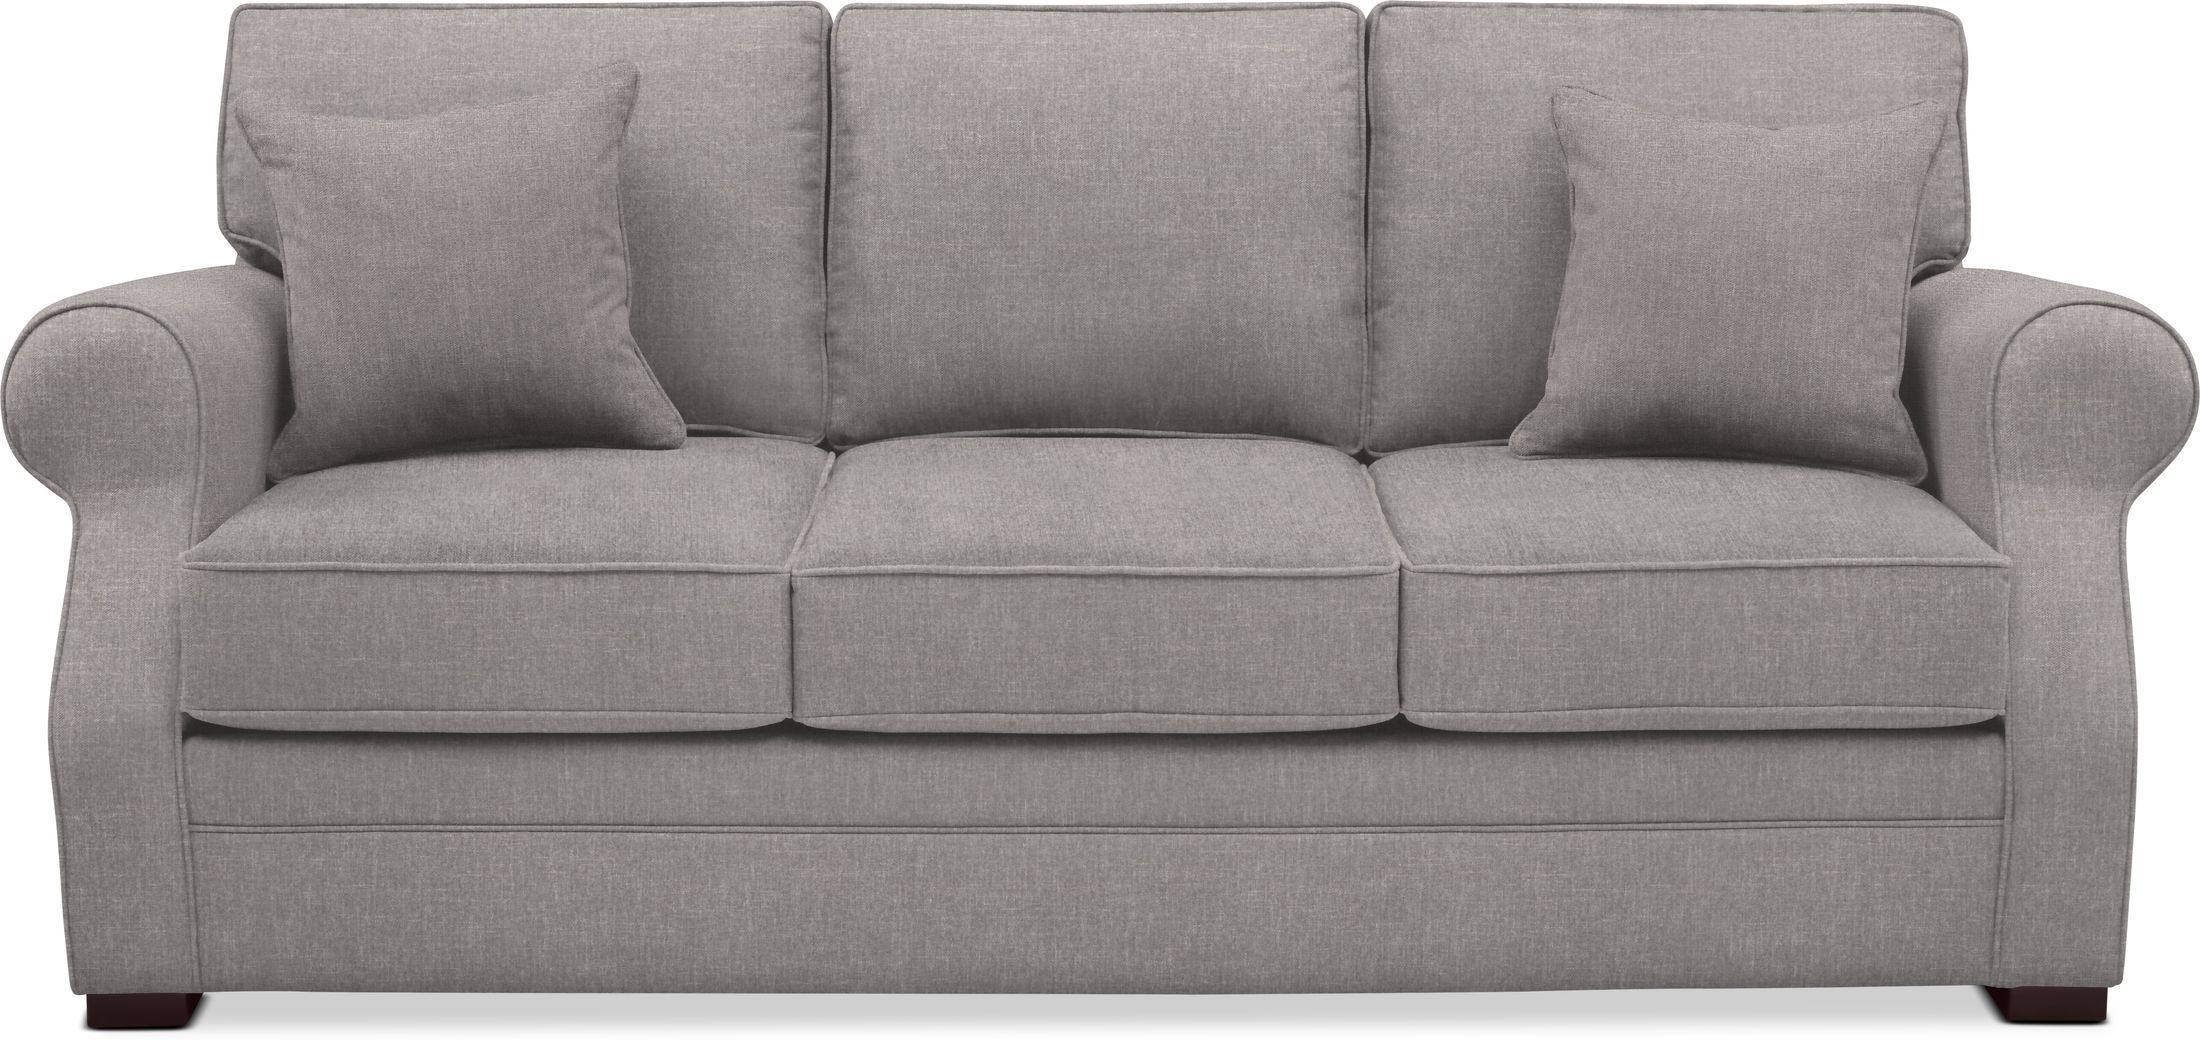 Tallulah Sofa - Curious Silver Pine | American Signature Furniture